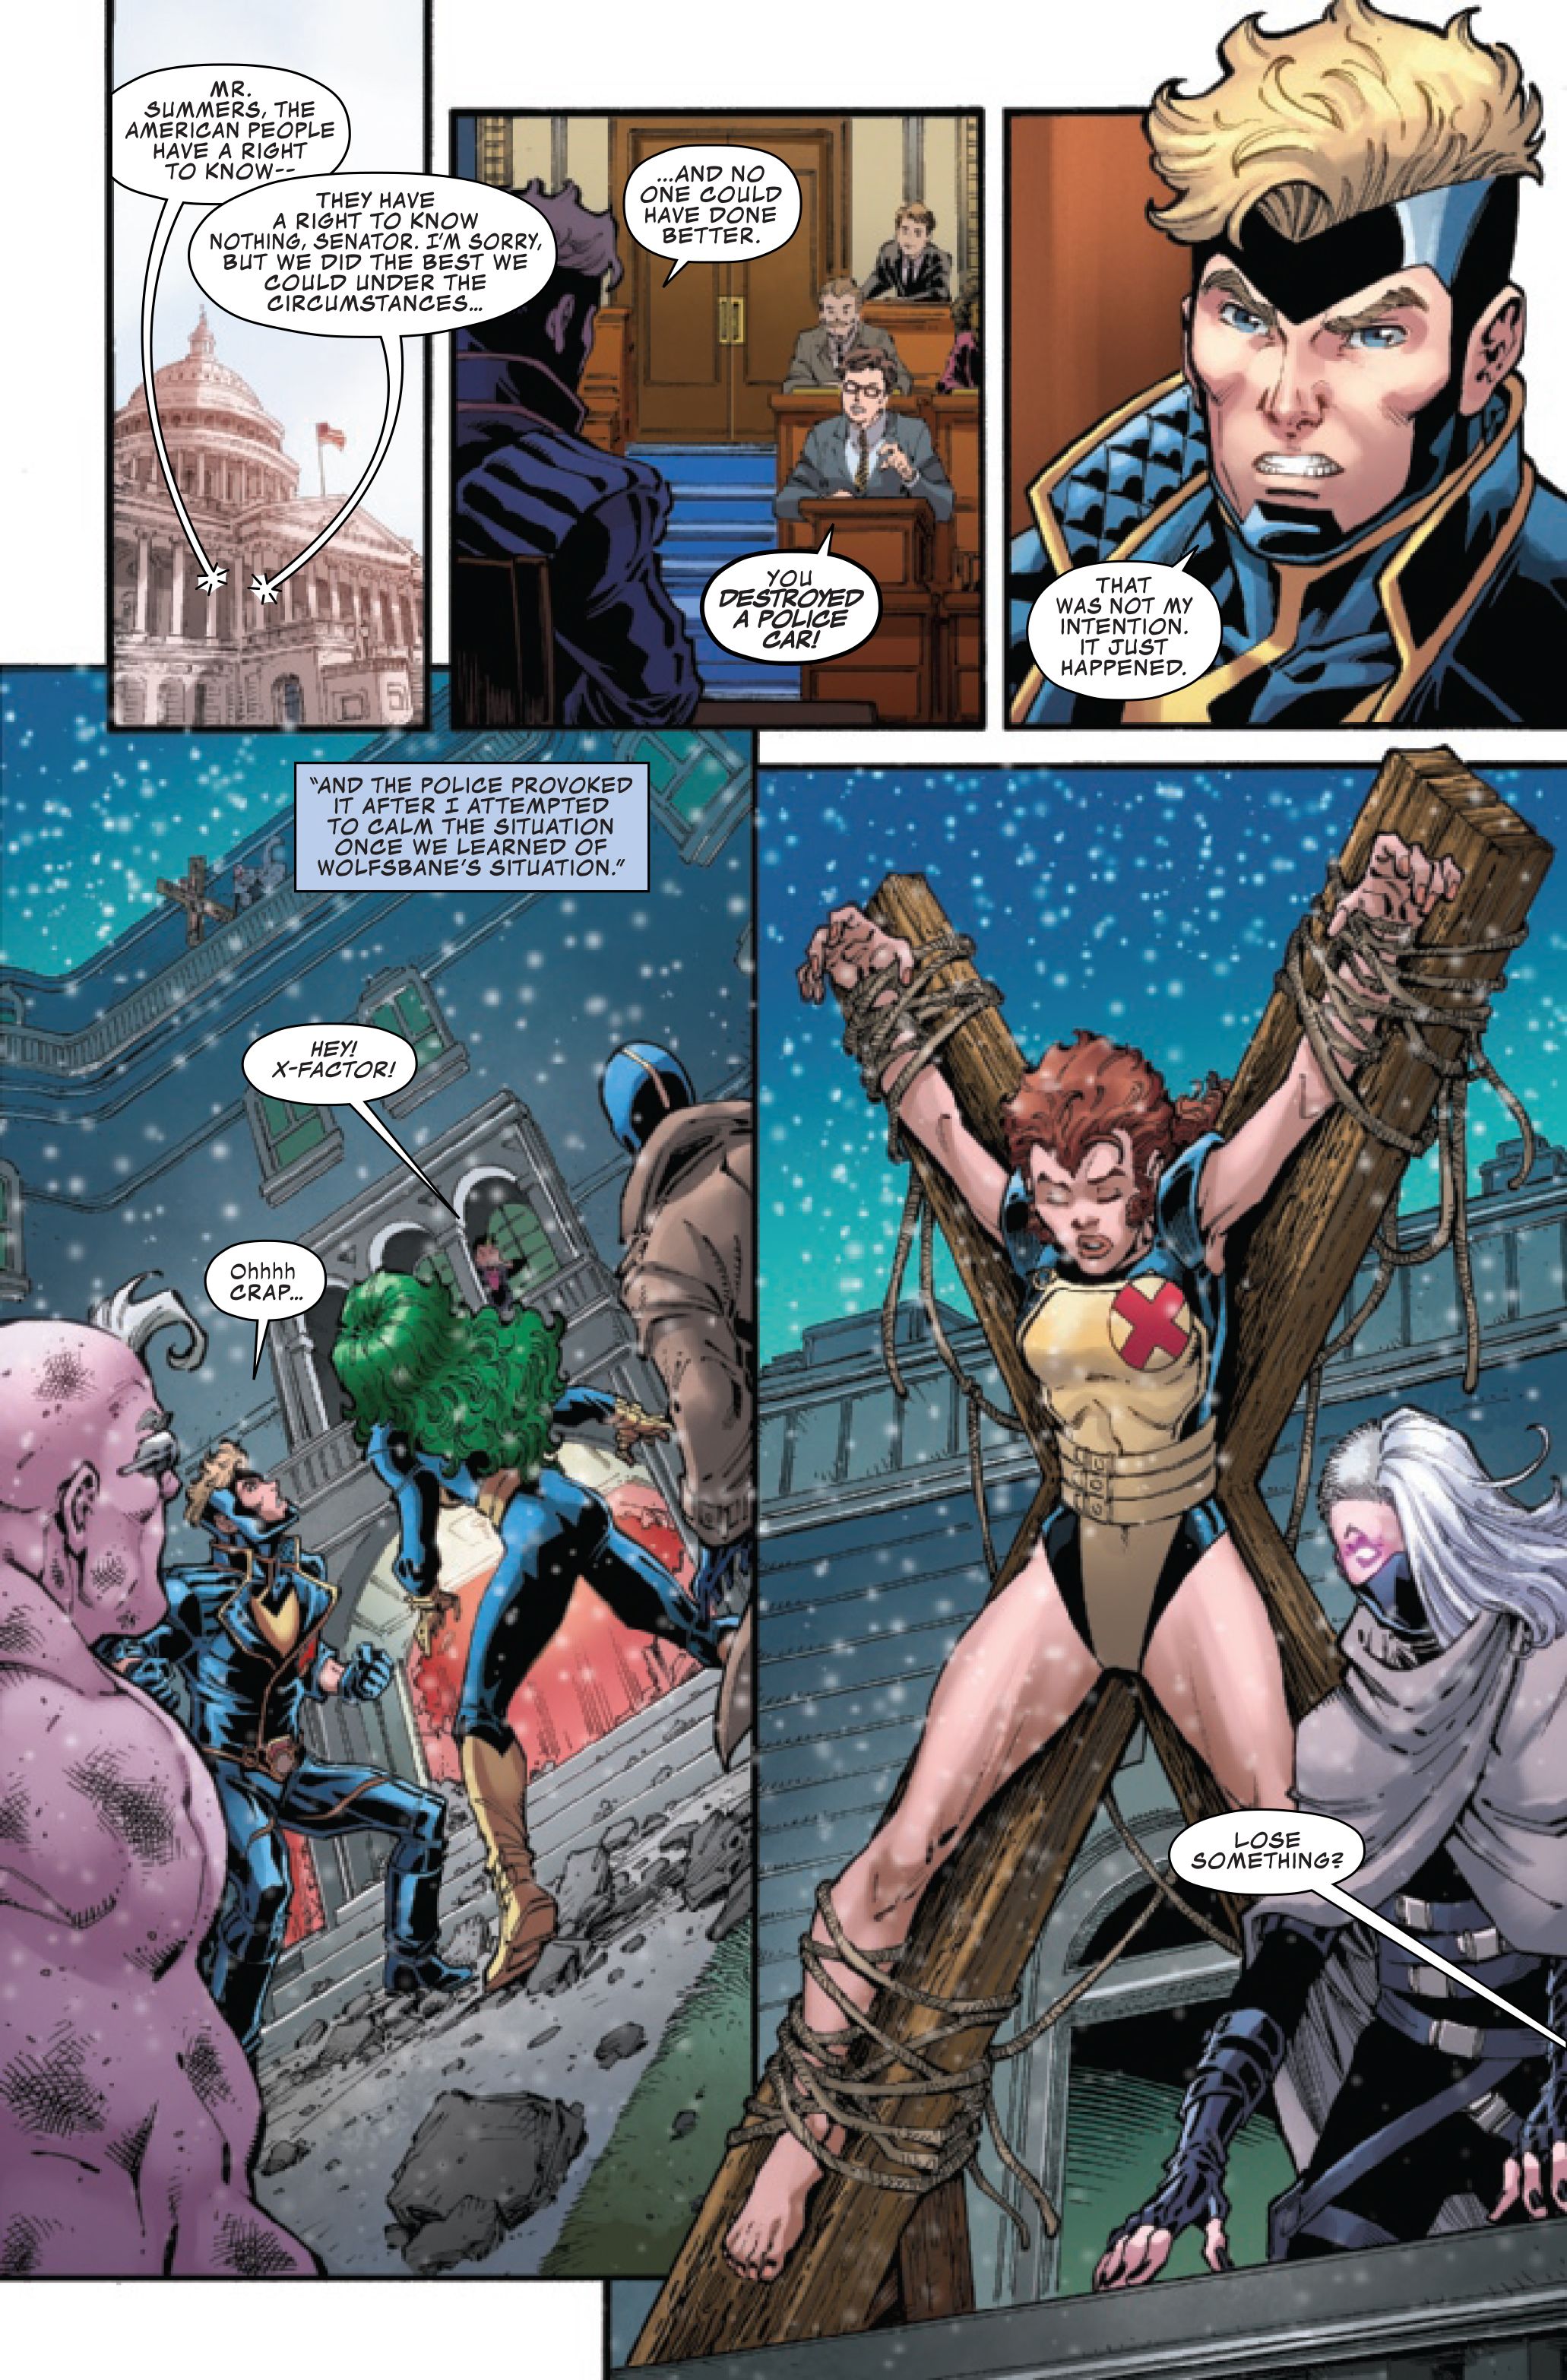 Page 2 of X-Men Legends #6, by Peter David, Todd Nauck, Rachelle Rosenberg and VC's Joe Caramagna.